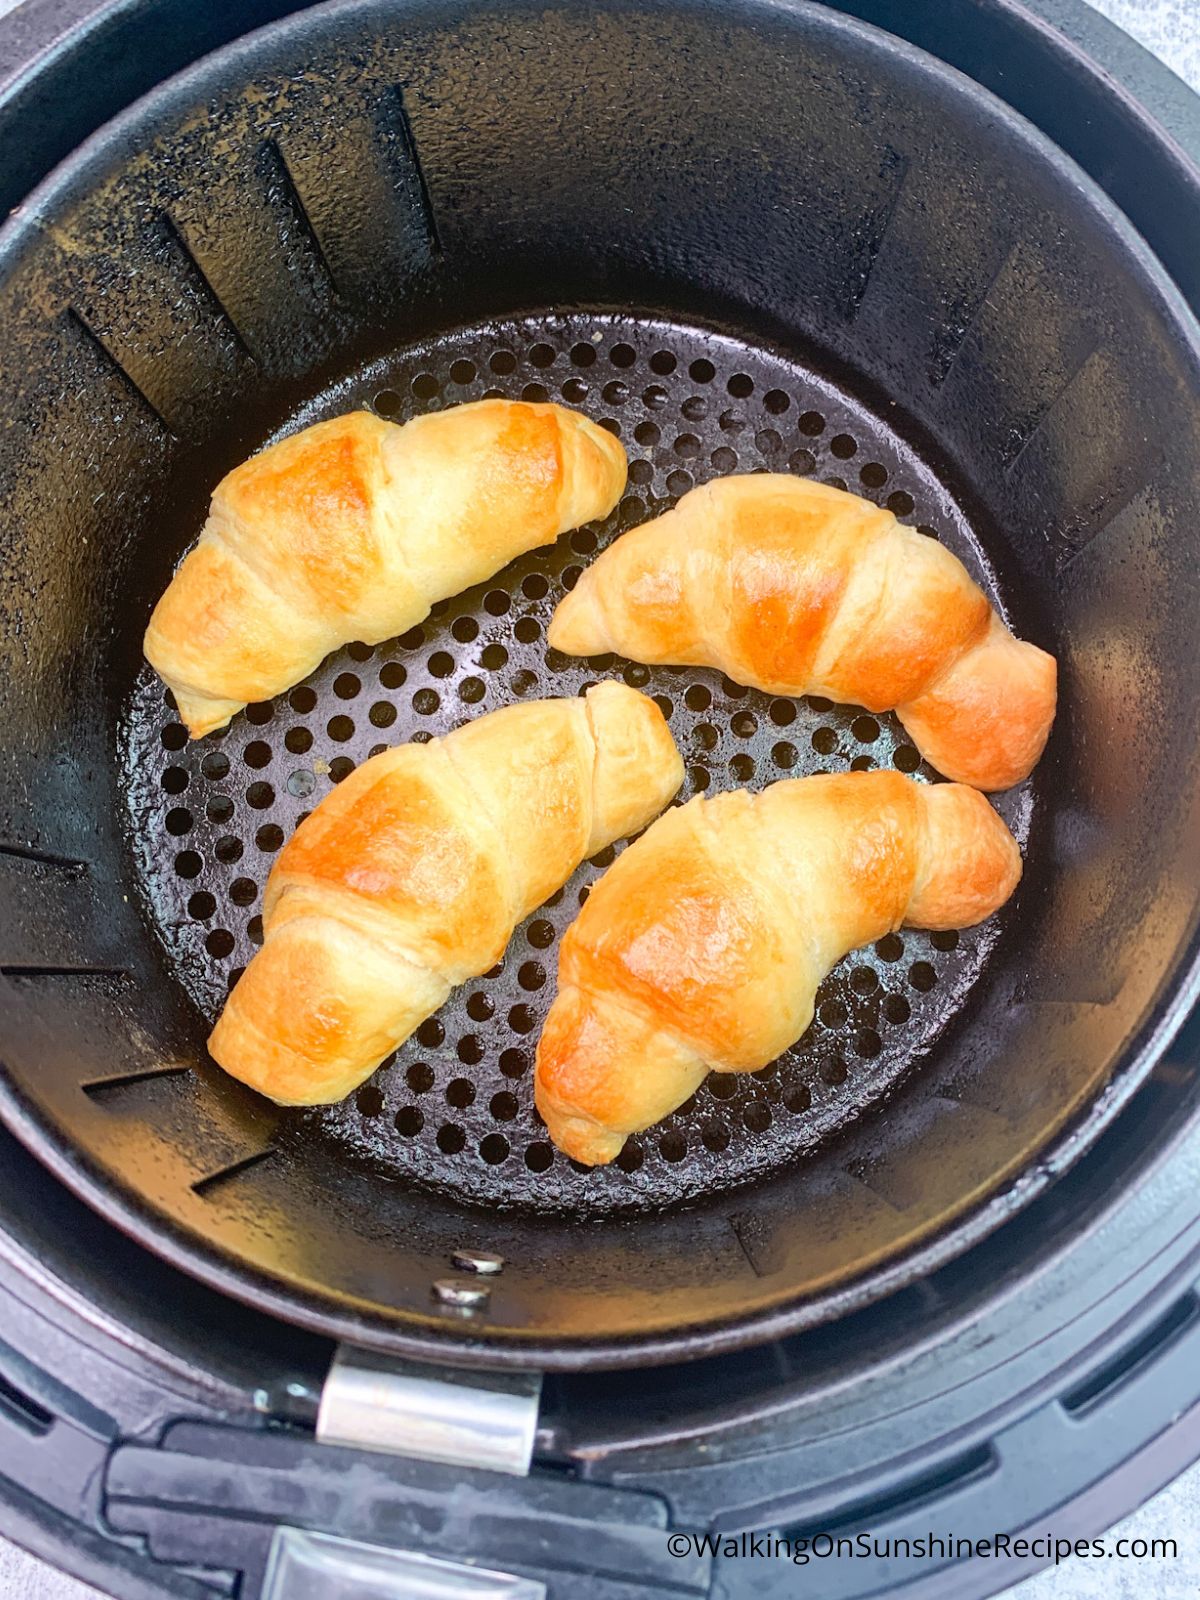 crescemt rolls baked in air fryer.